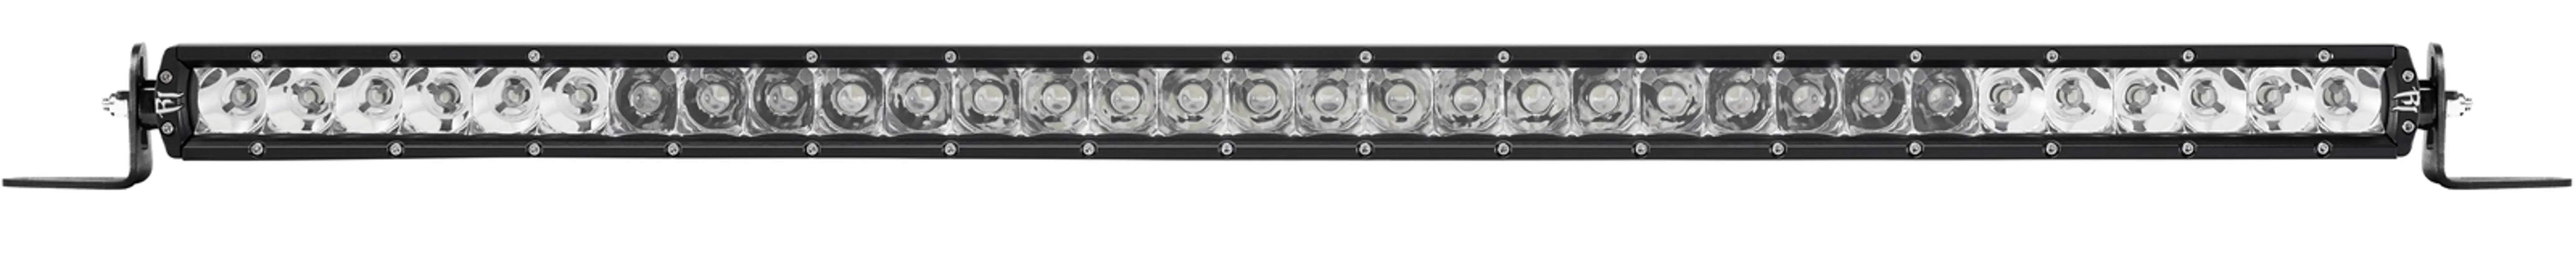 Polaris 2884299 - Rigid® 32" Combo LED Light Bar